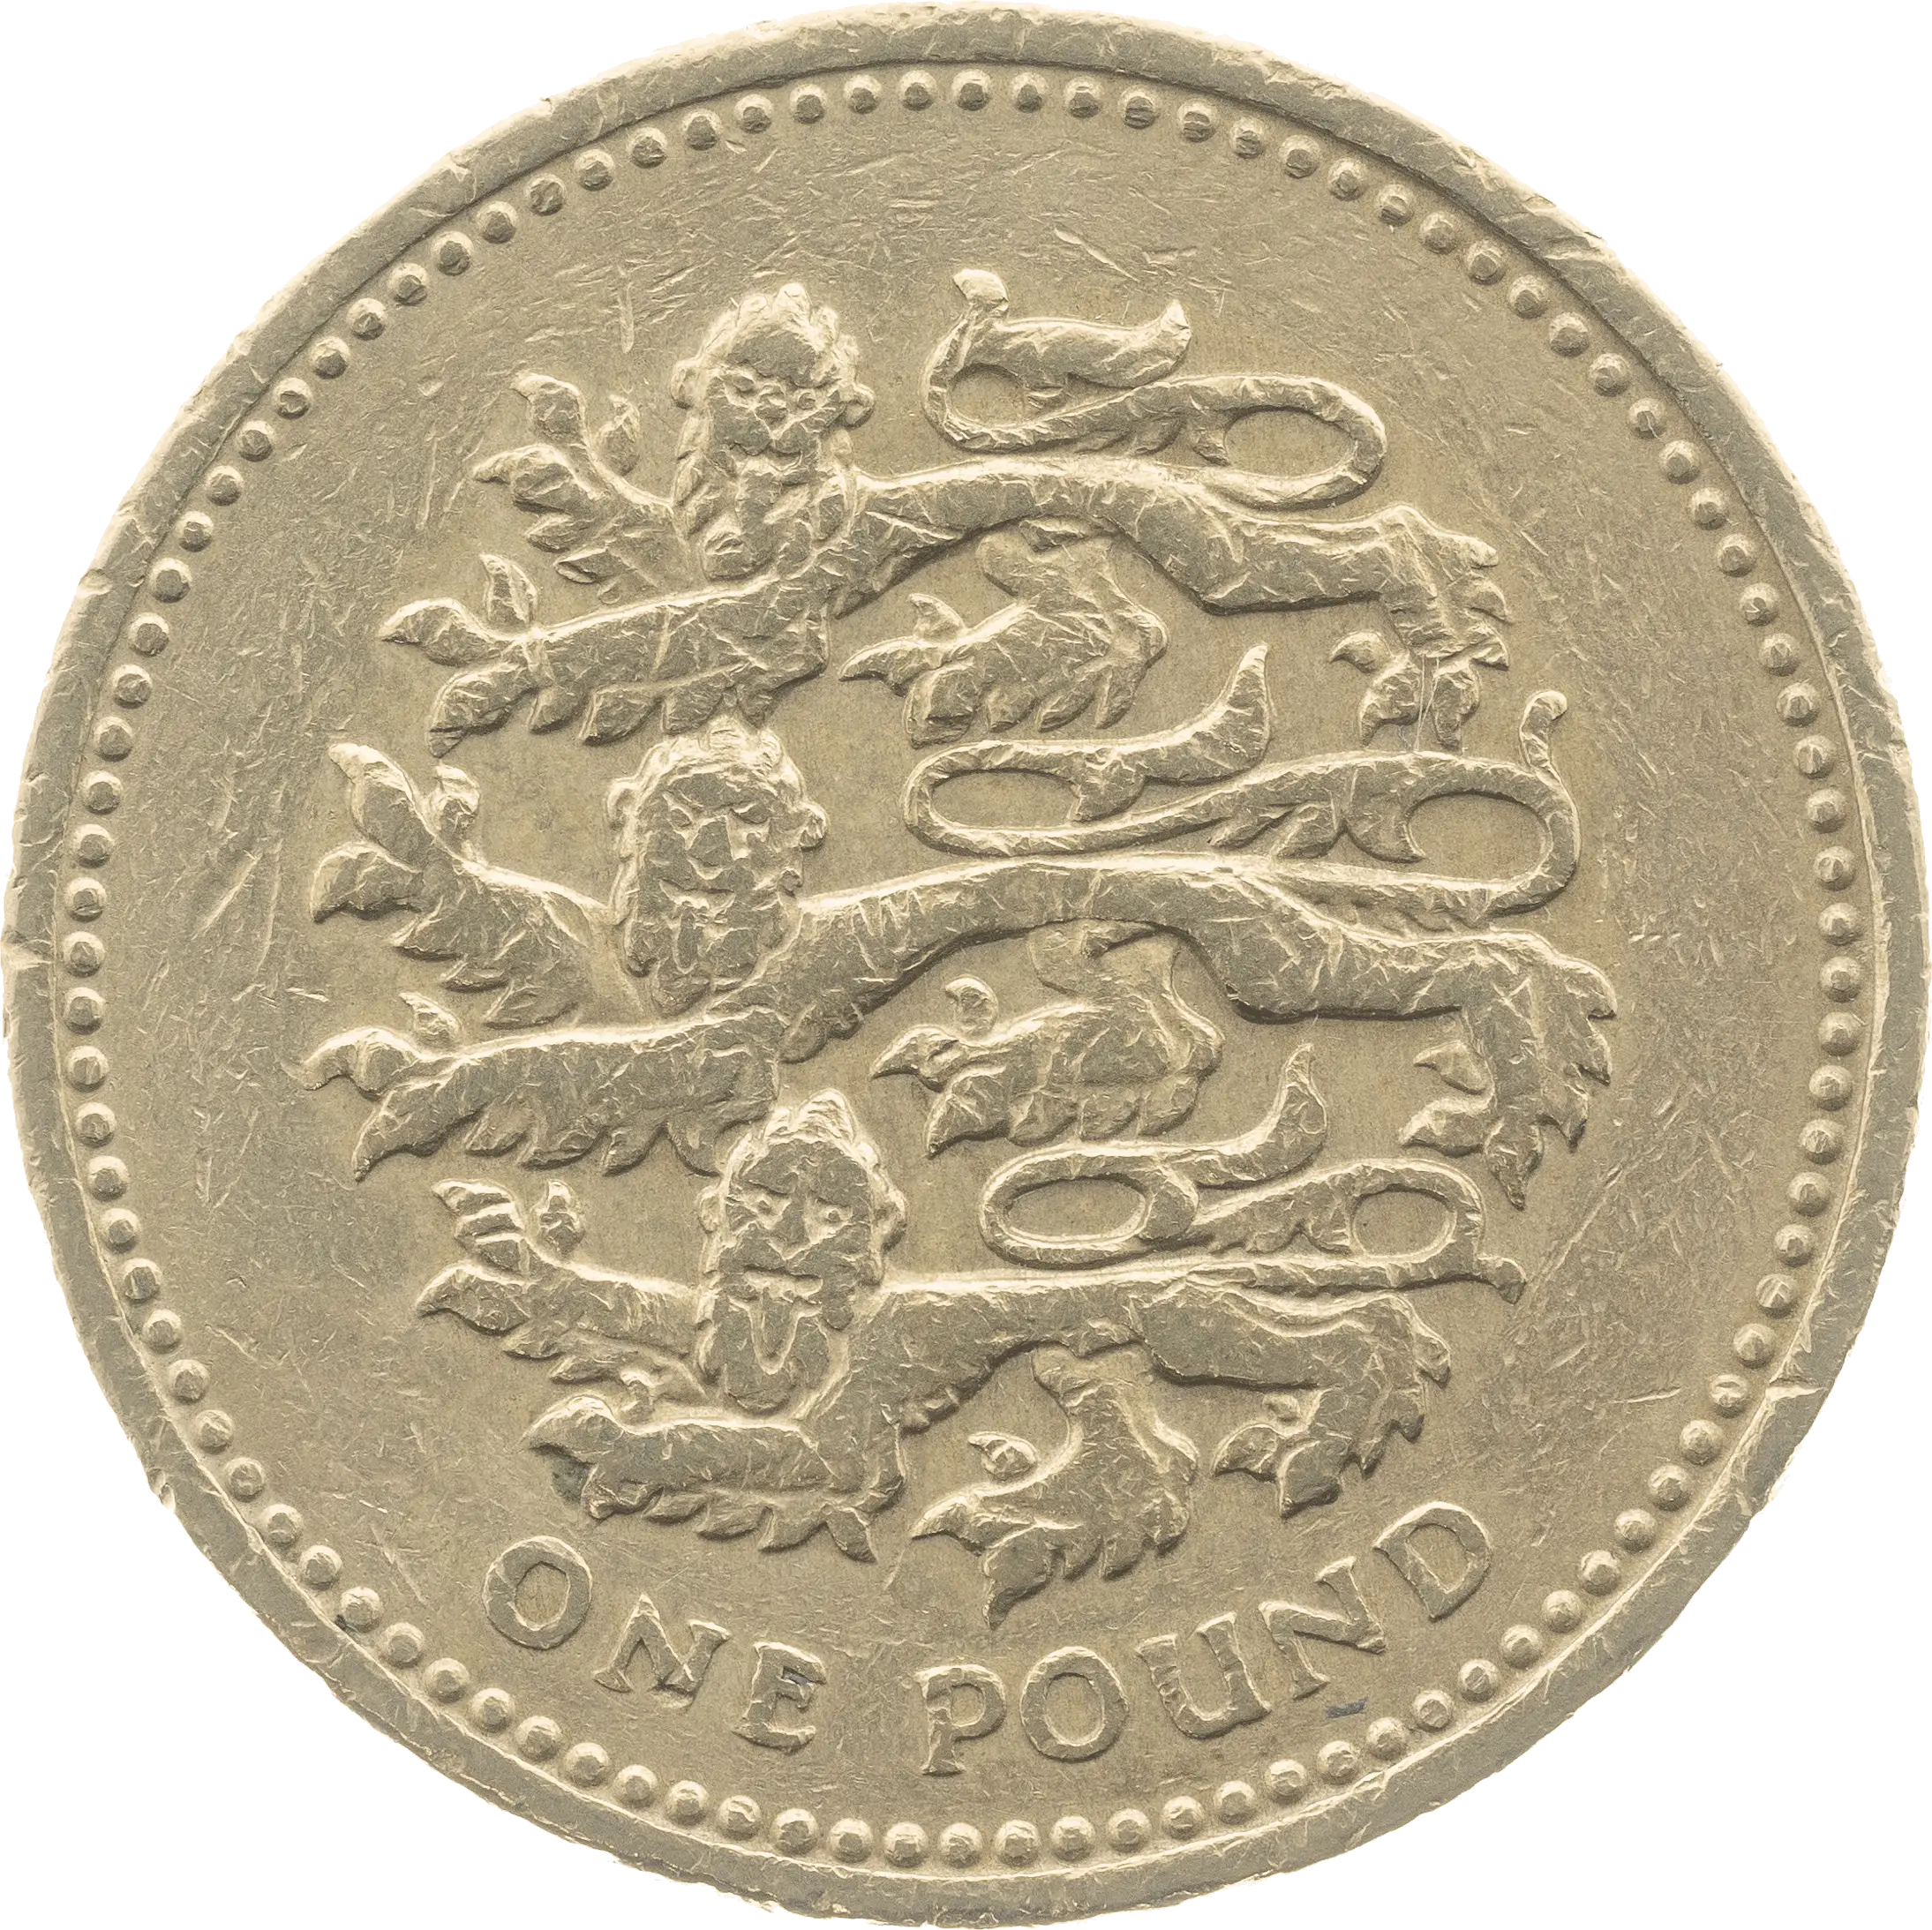 Three Lions £1 Coin Design